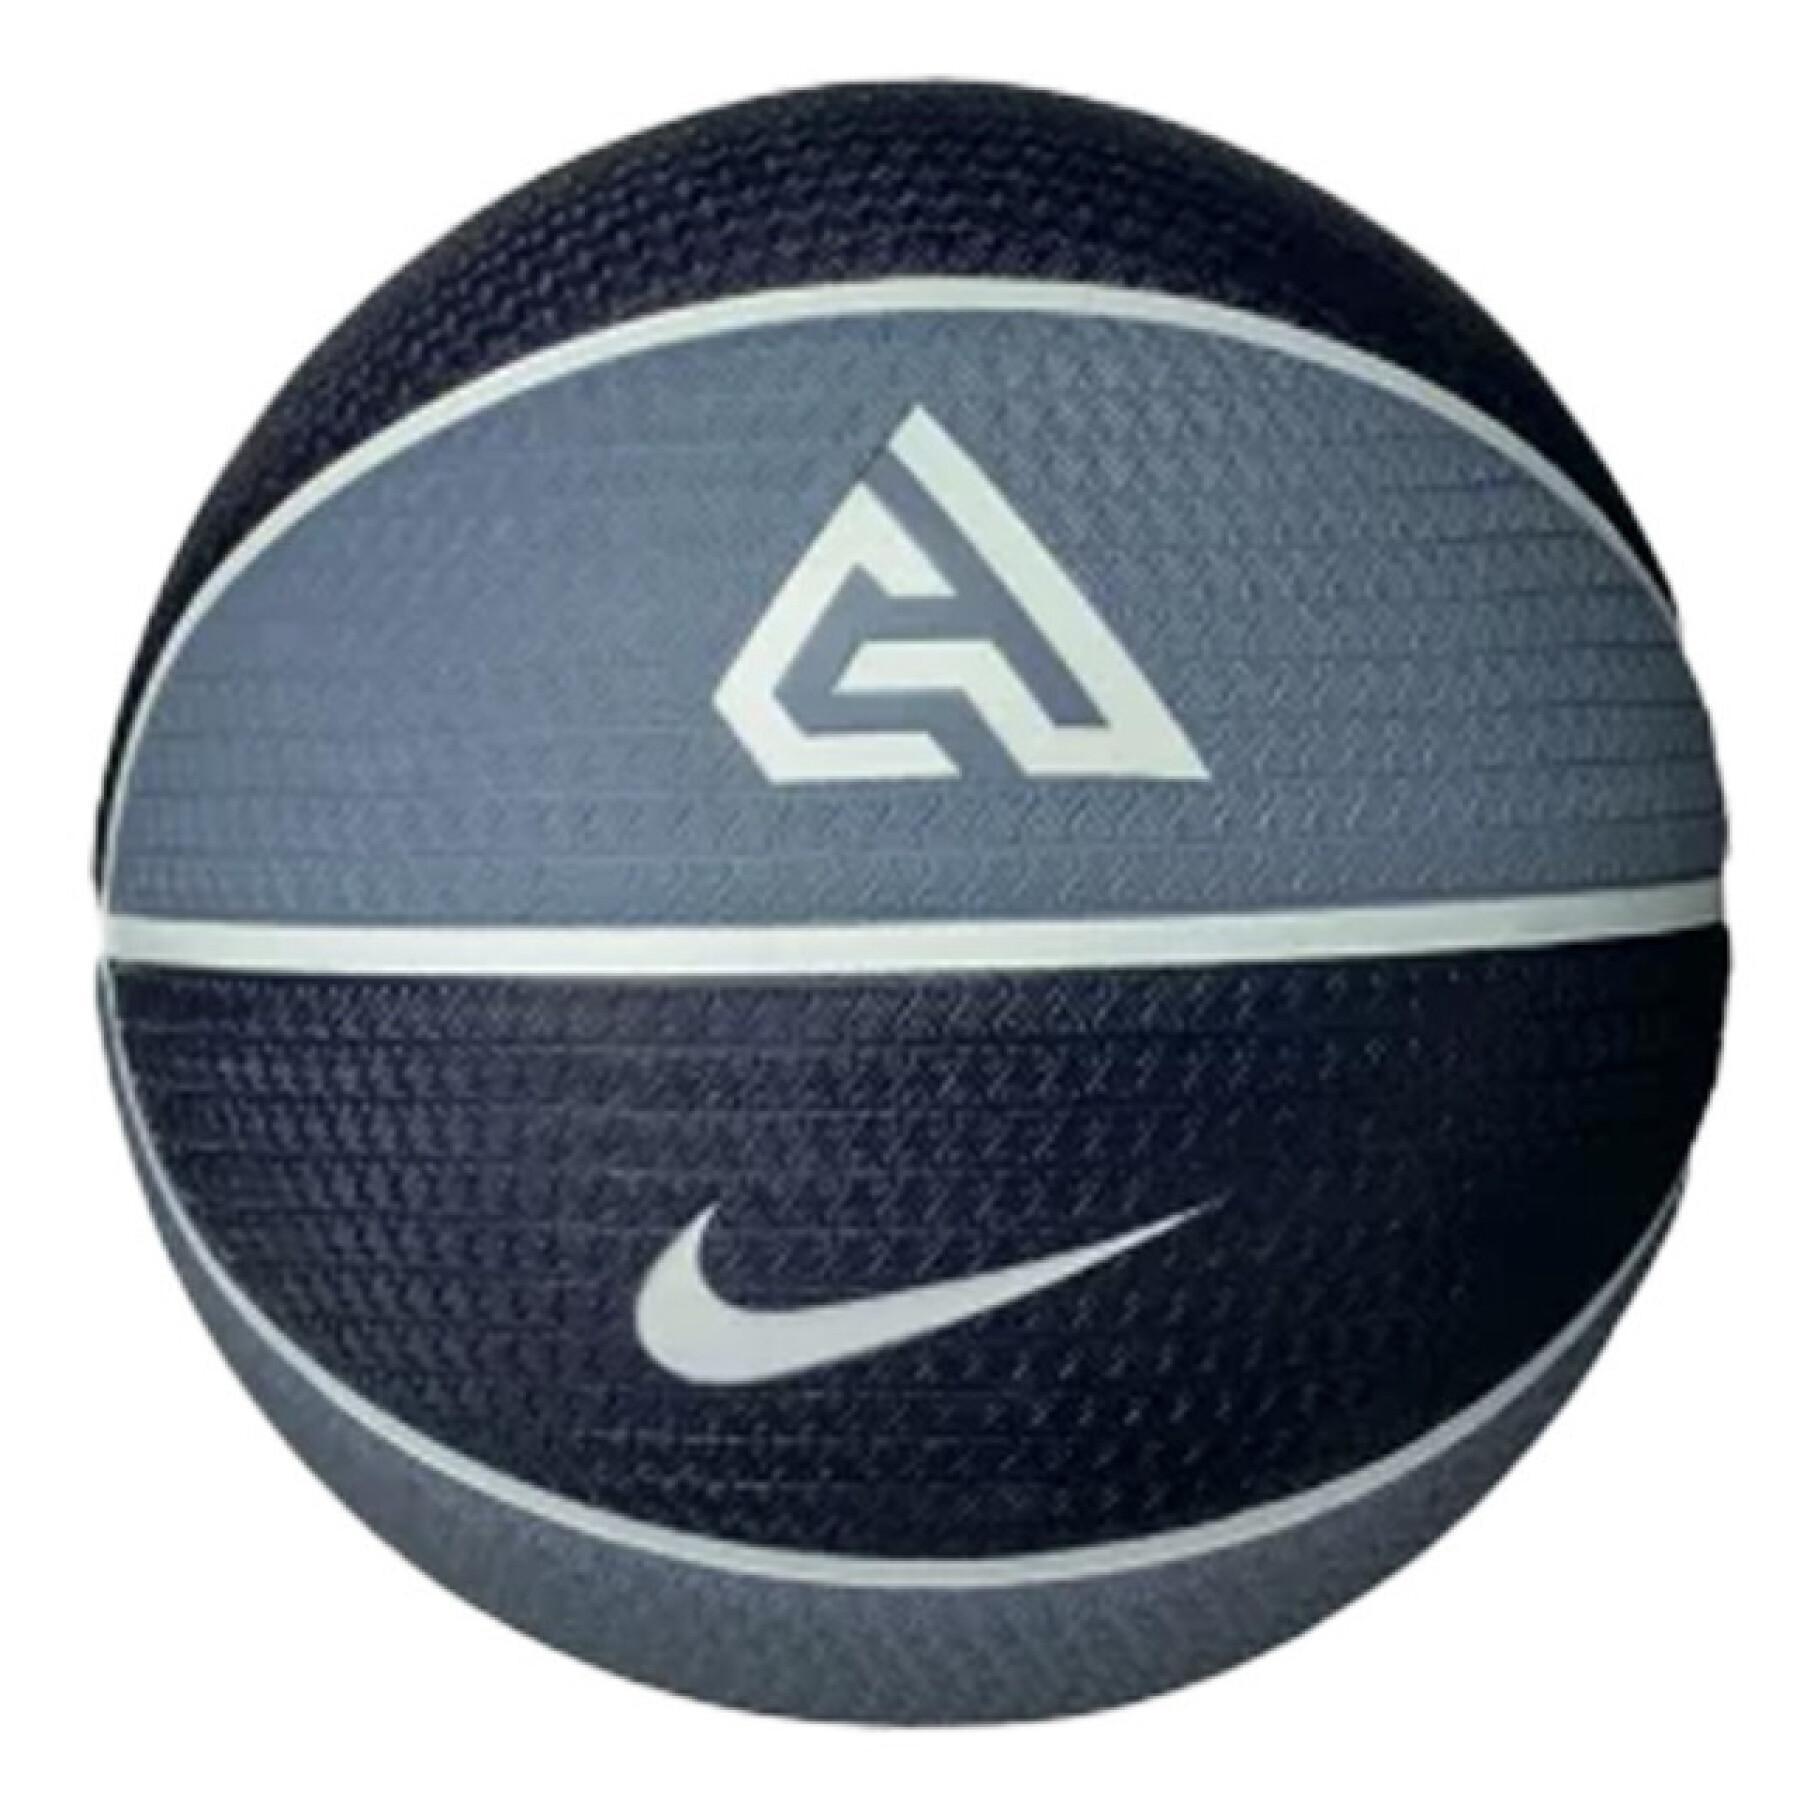 Basketball Nike Playground 8P 2.0 G Antetokounmpo Deflated